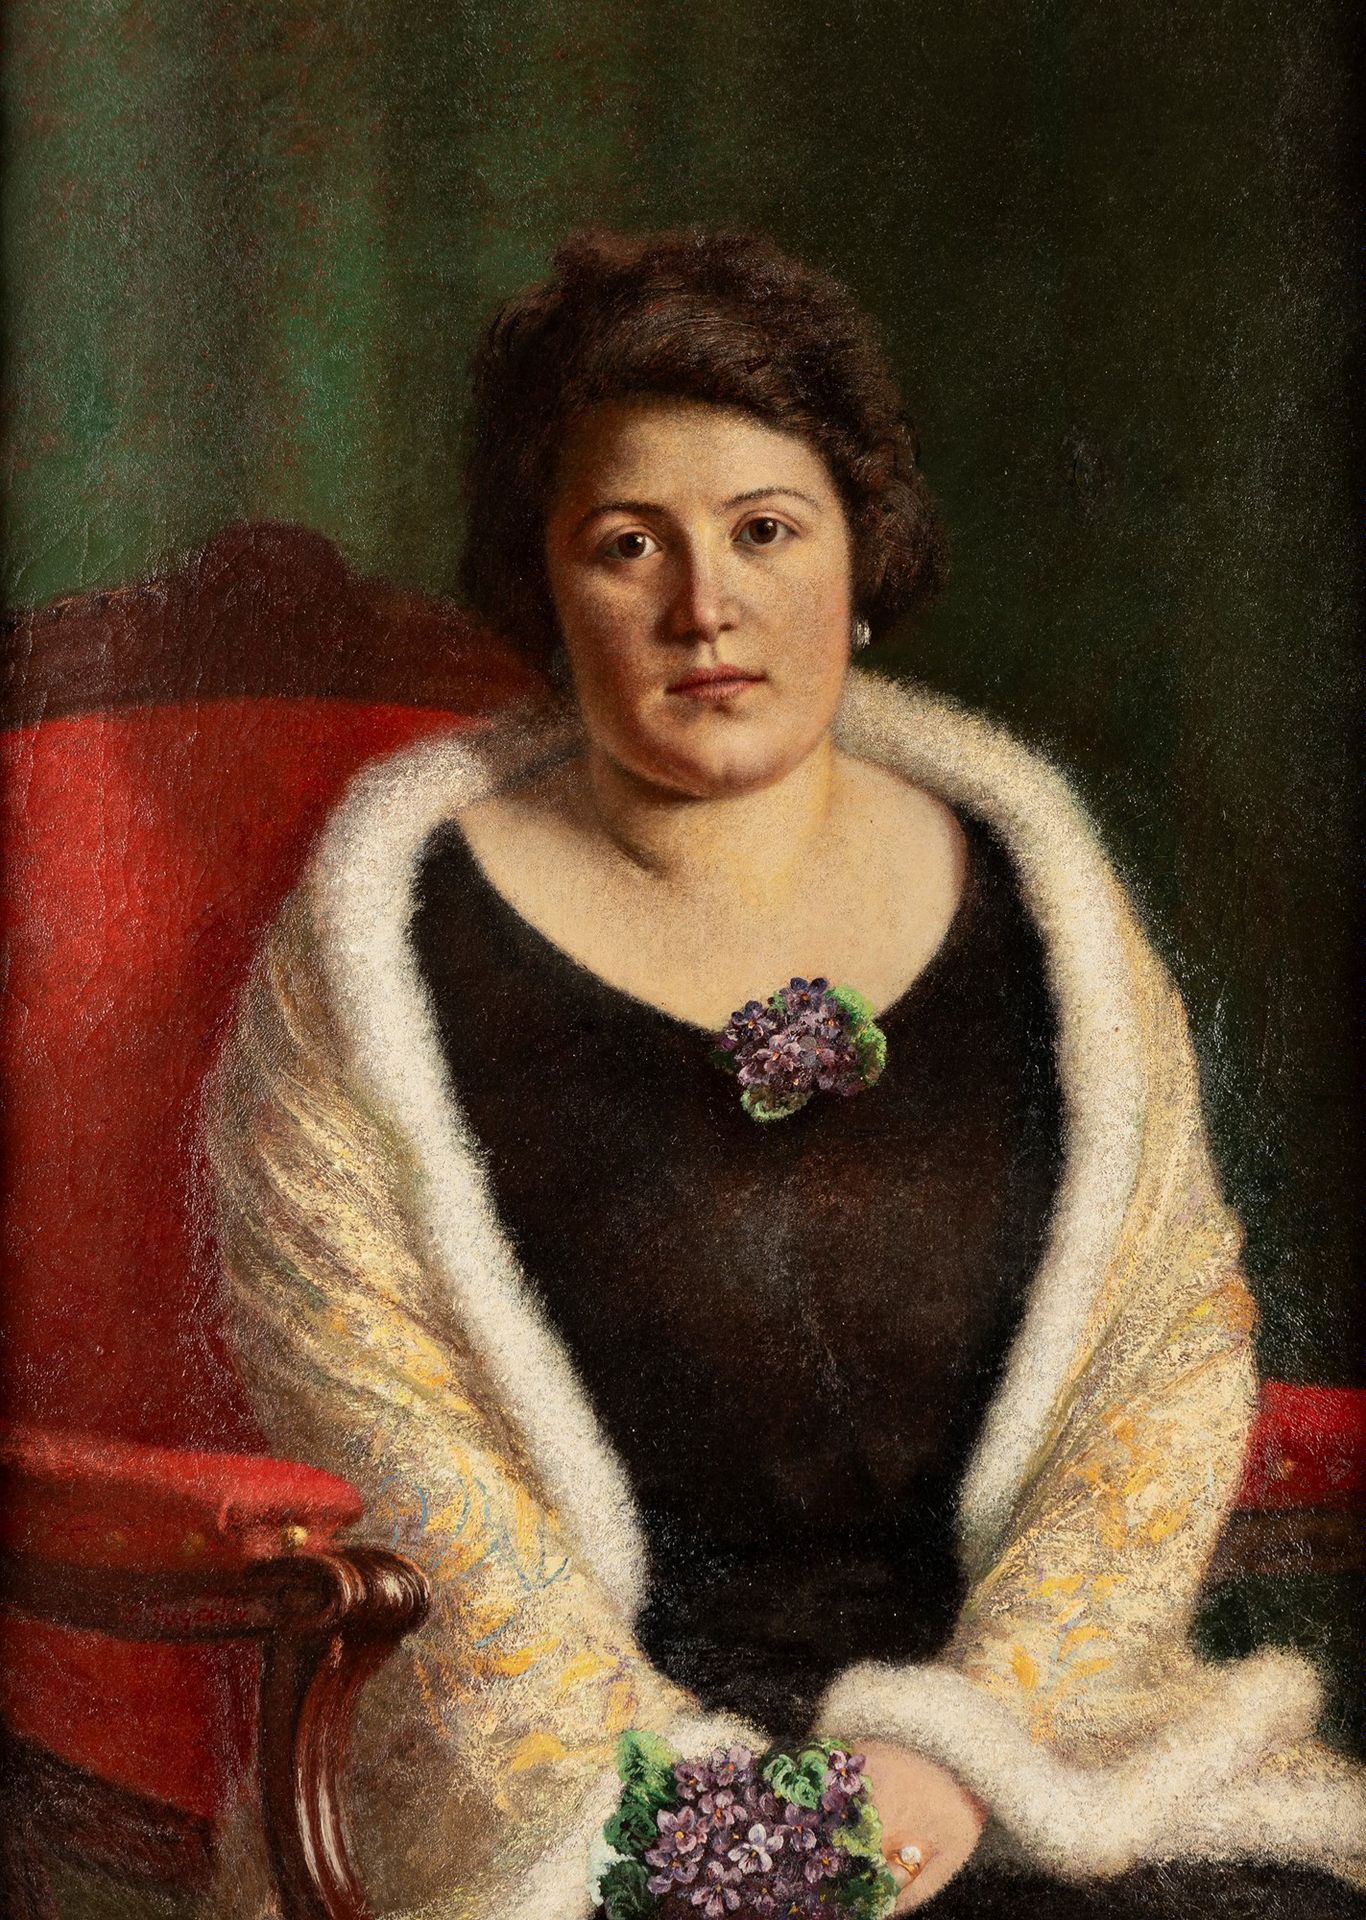 Carlo Bugatti 卡洛-布加迪（1855 年生于米兰-1940 年生于莫尔塞姆） - 女性肖像

布面油画 
92 x 67 厘米
左下方有签名布加迪